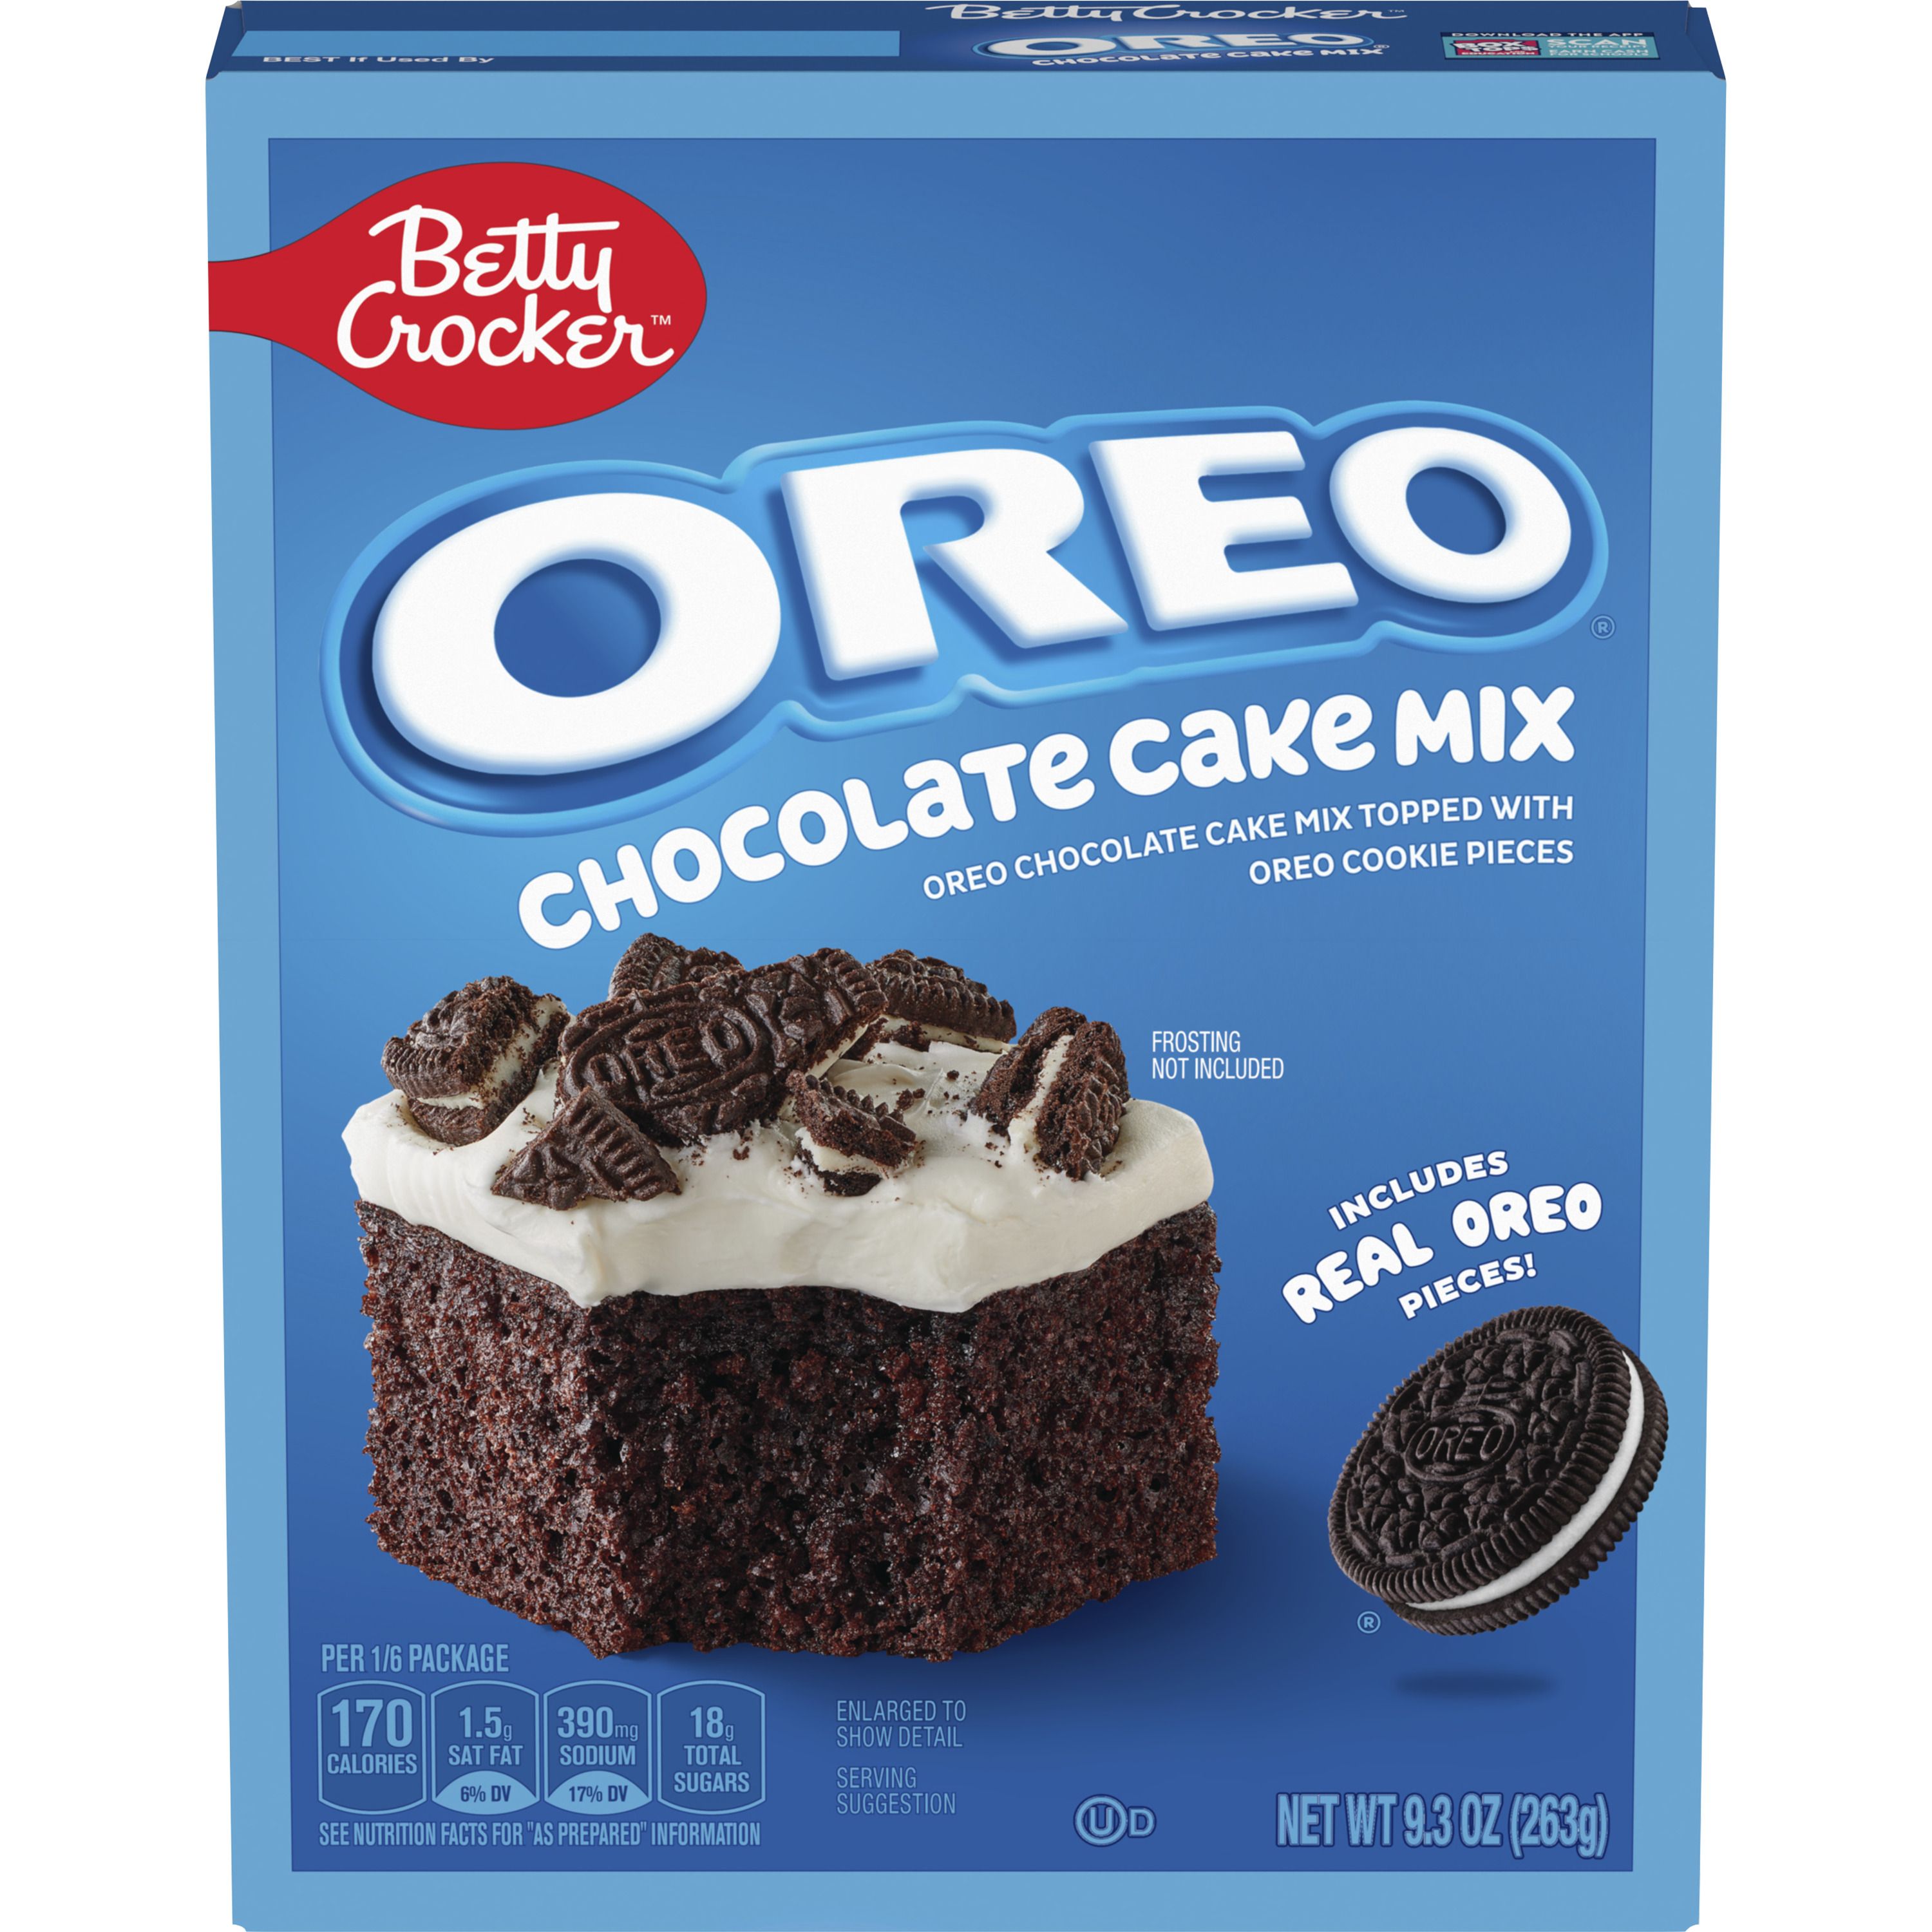 Betty Crocker OREO Chocolate Cake Mix, Chocolate Cake Baking Mix With OREO Cookie Pieces, 9.3 oz - Front